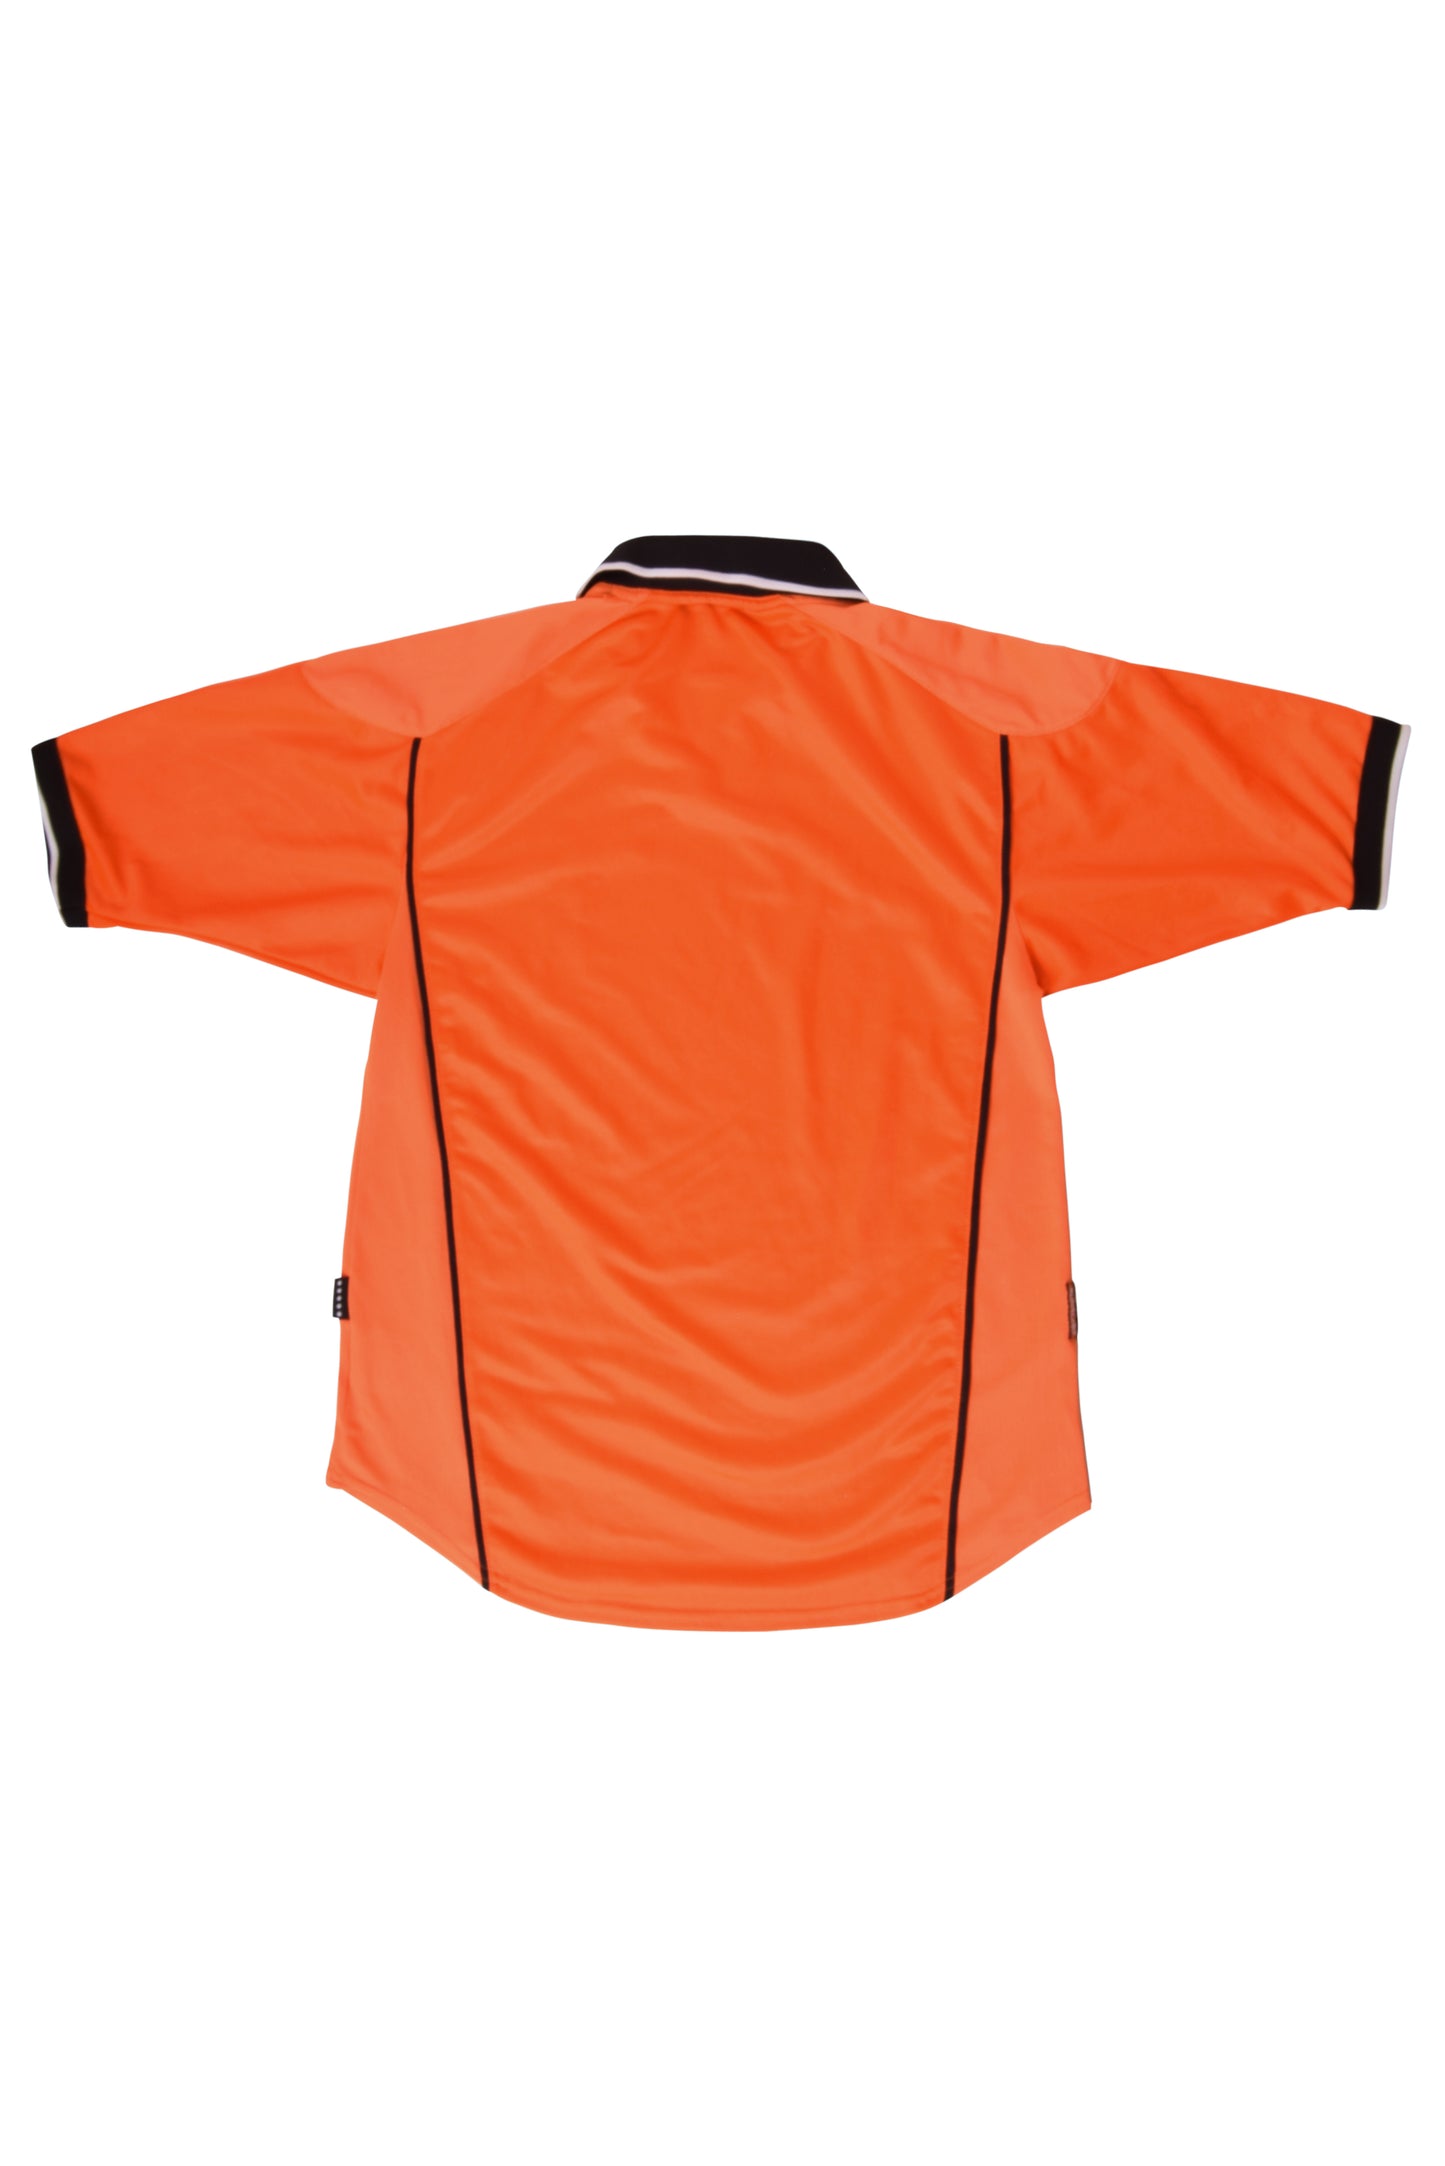 Vintage Holland Netherlands Nike 1998-1999 Home Football Shirt Orange Size S Made in UK